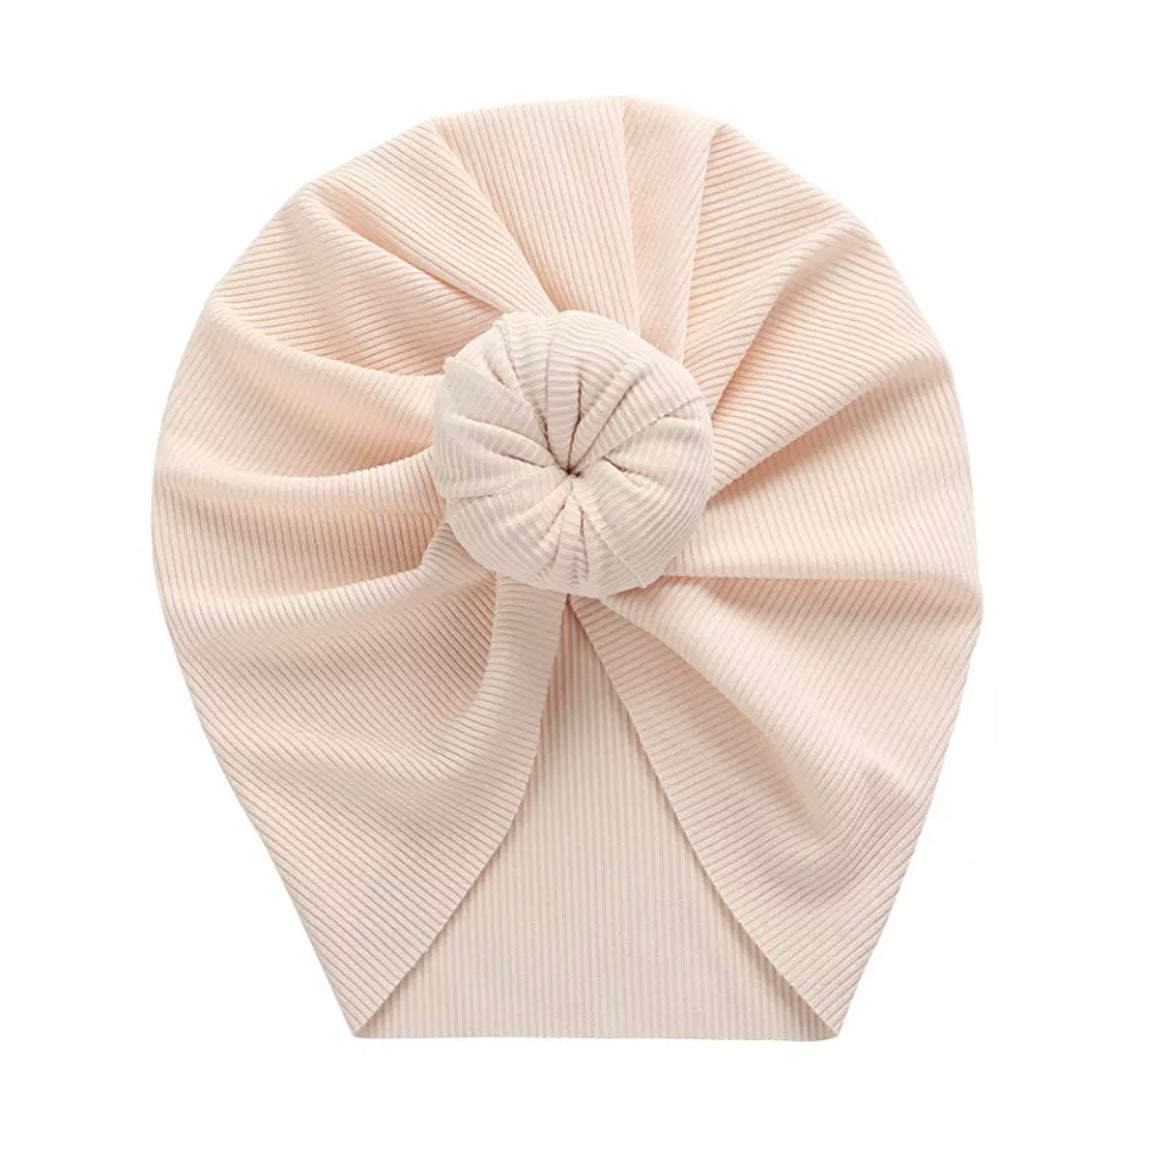 Ribbed top knot turban (cream)